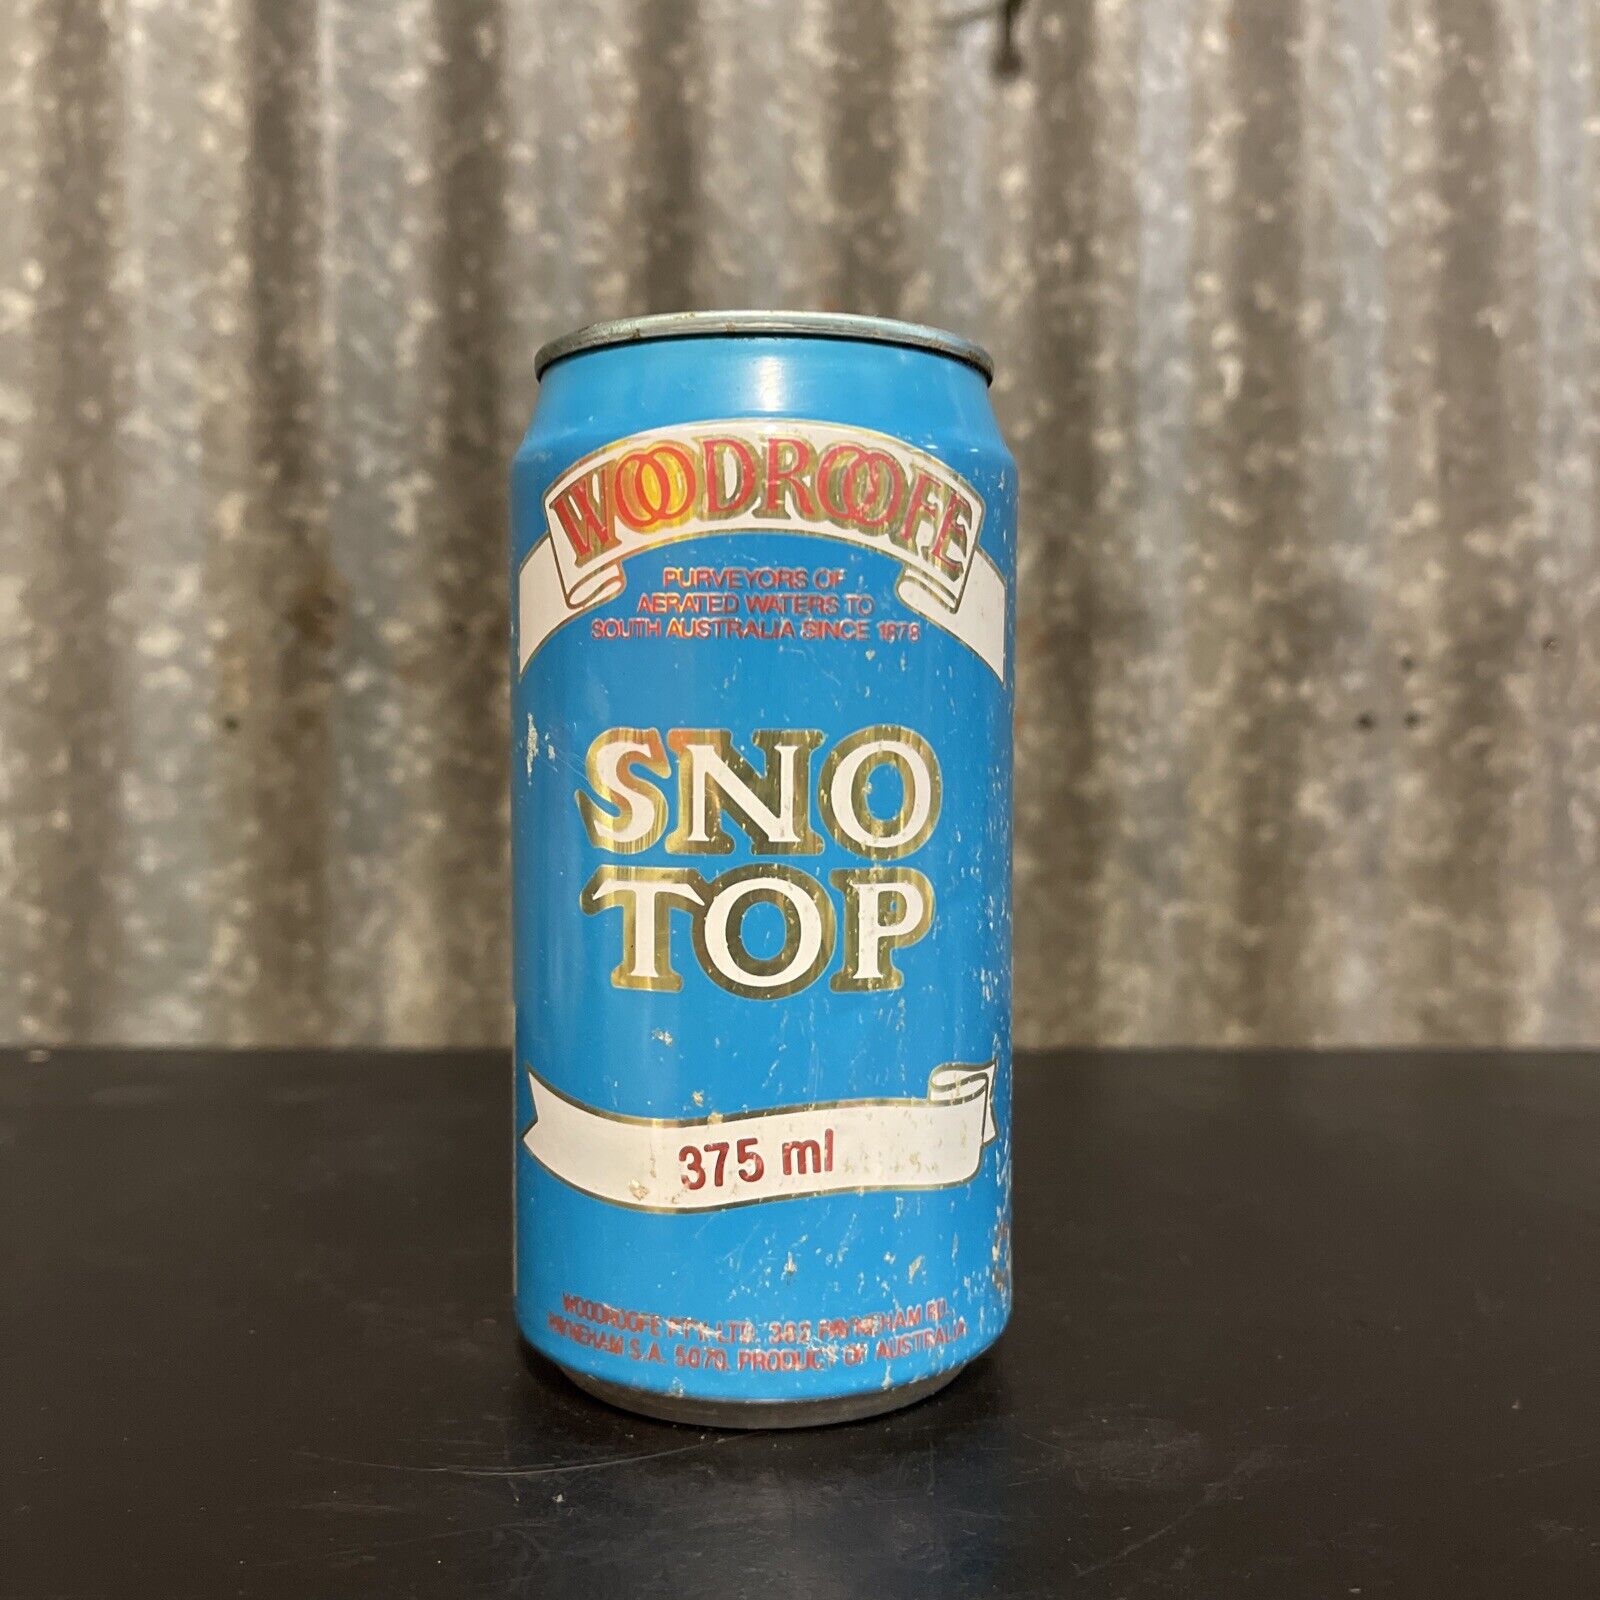 WOODROOFES SNO TOP 375ml Vintage Soft Drink Can Australia